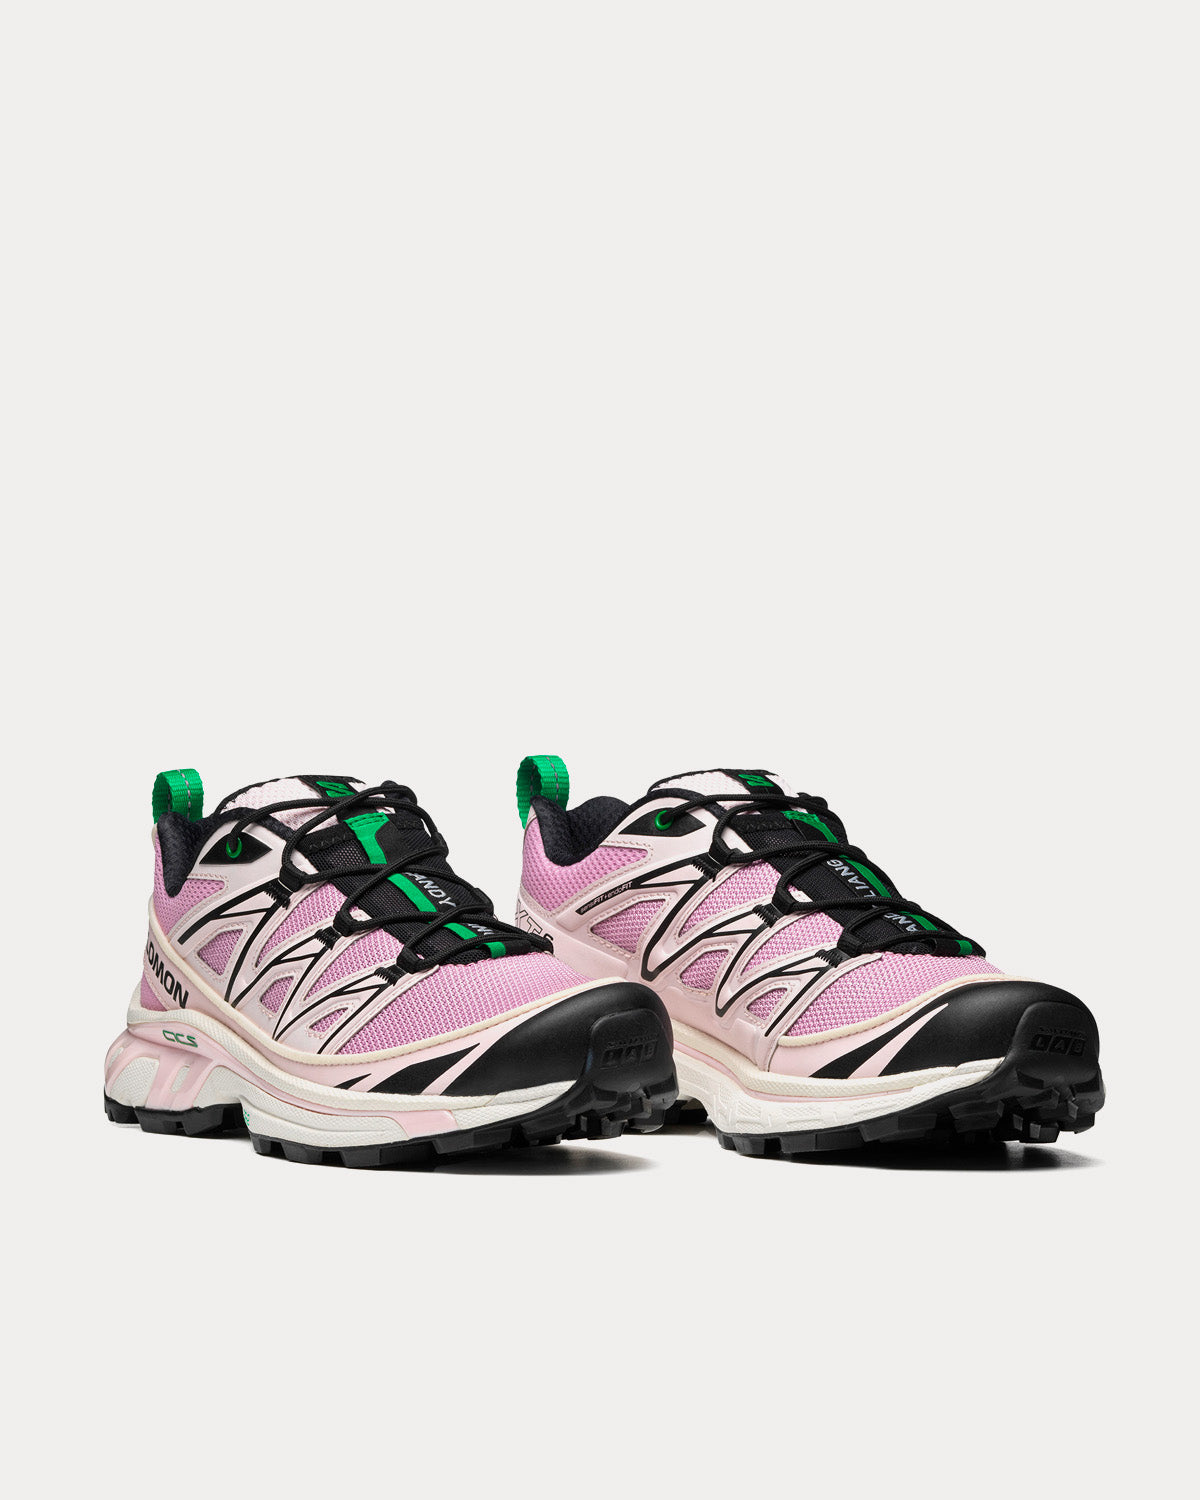 Salomon x Sandy Liang - XT-6 Expanse Cradle Pink / Jelly Green / Black Low Top Sneakers